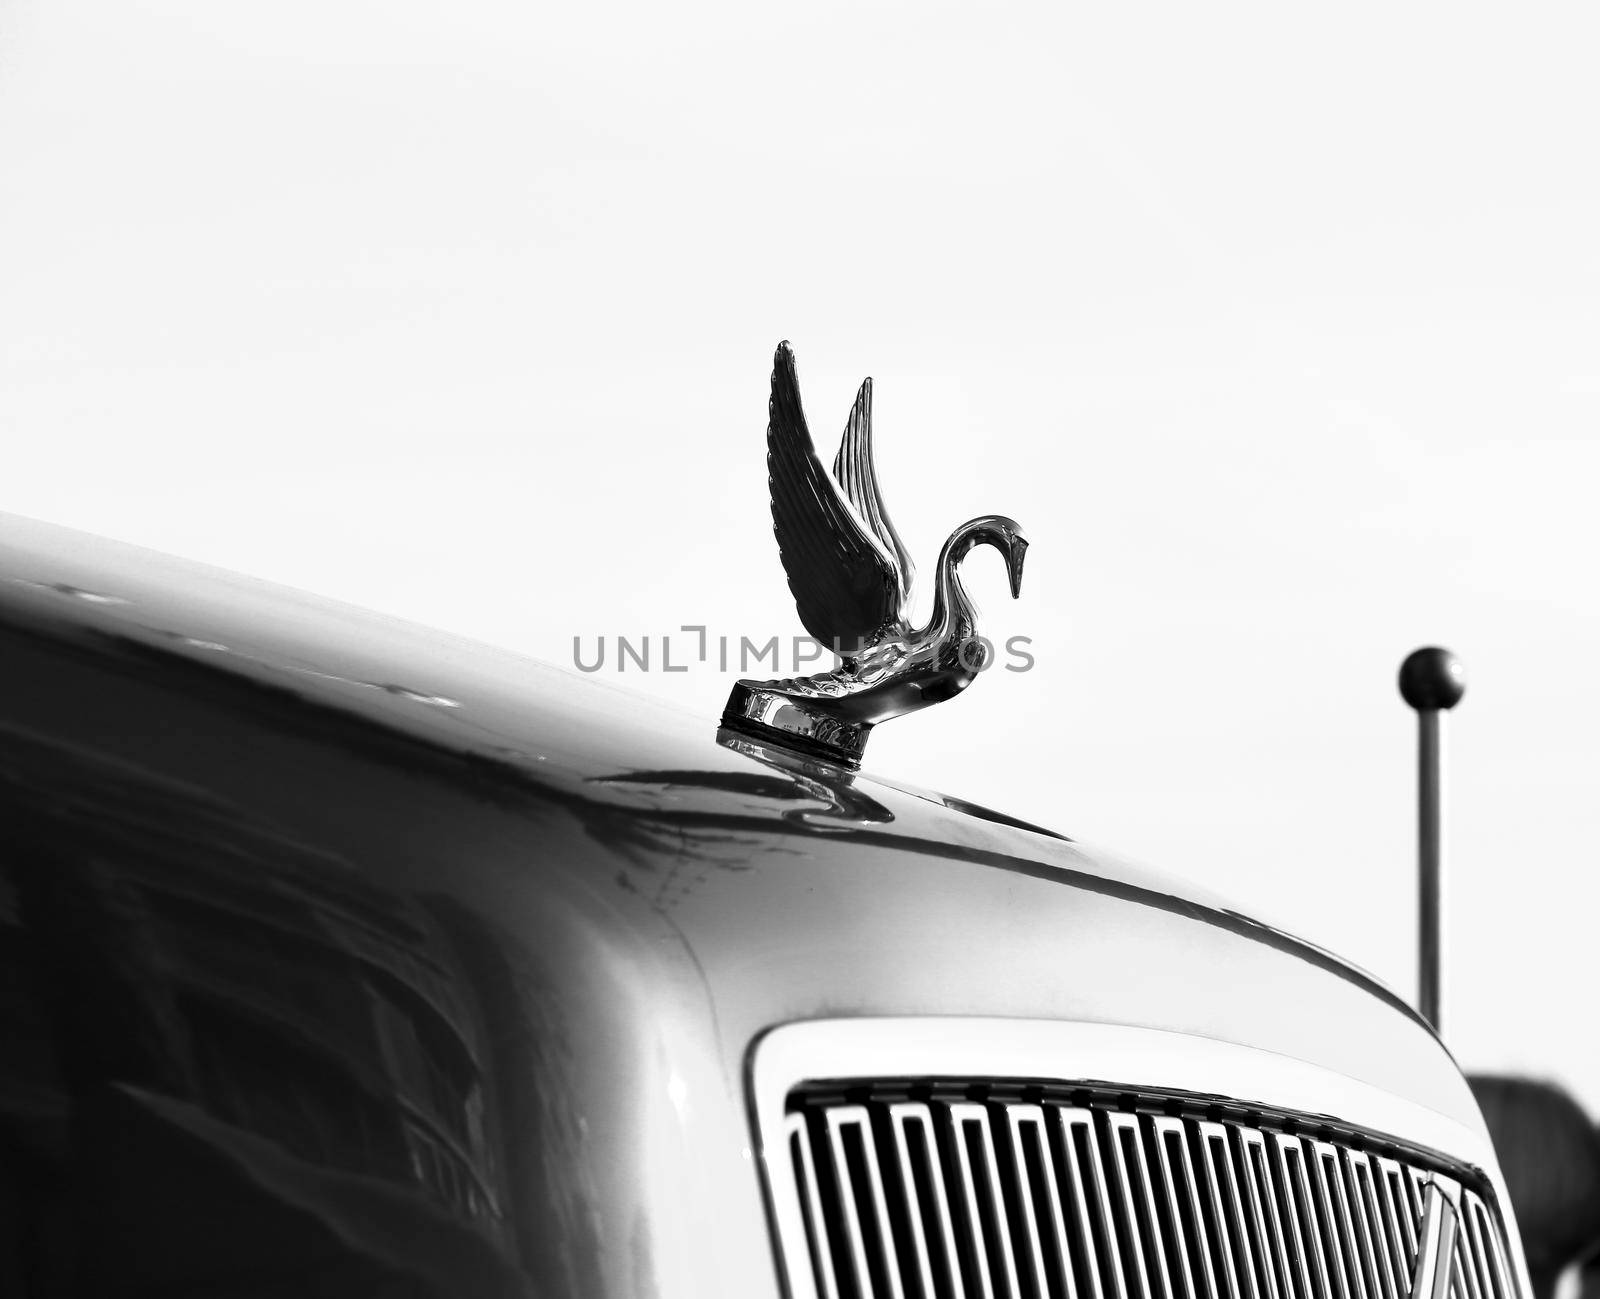 Metallic swan on bodywork of truck in Spain by soniabonet